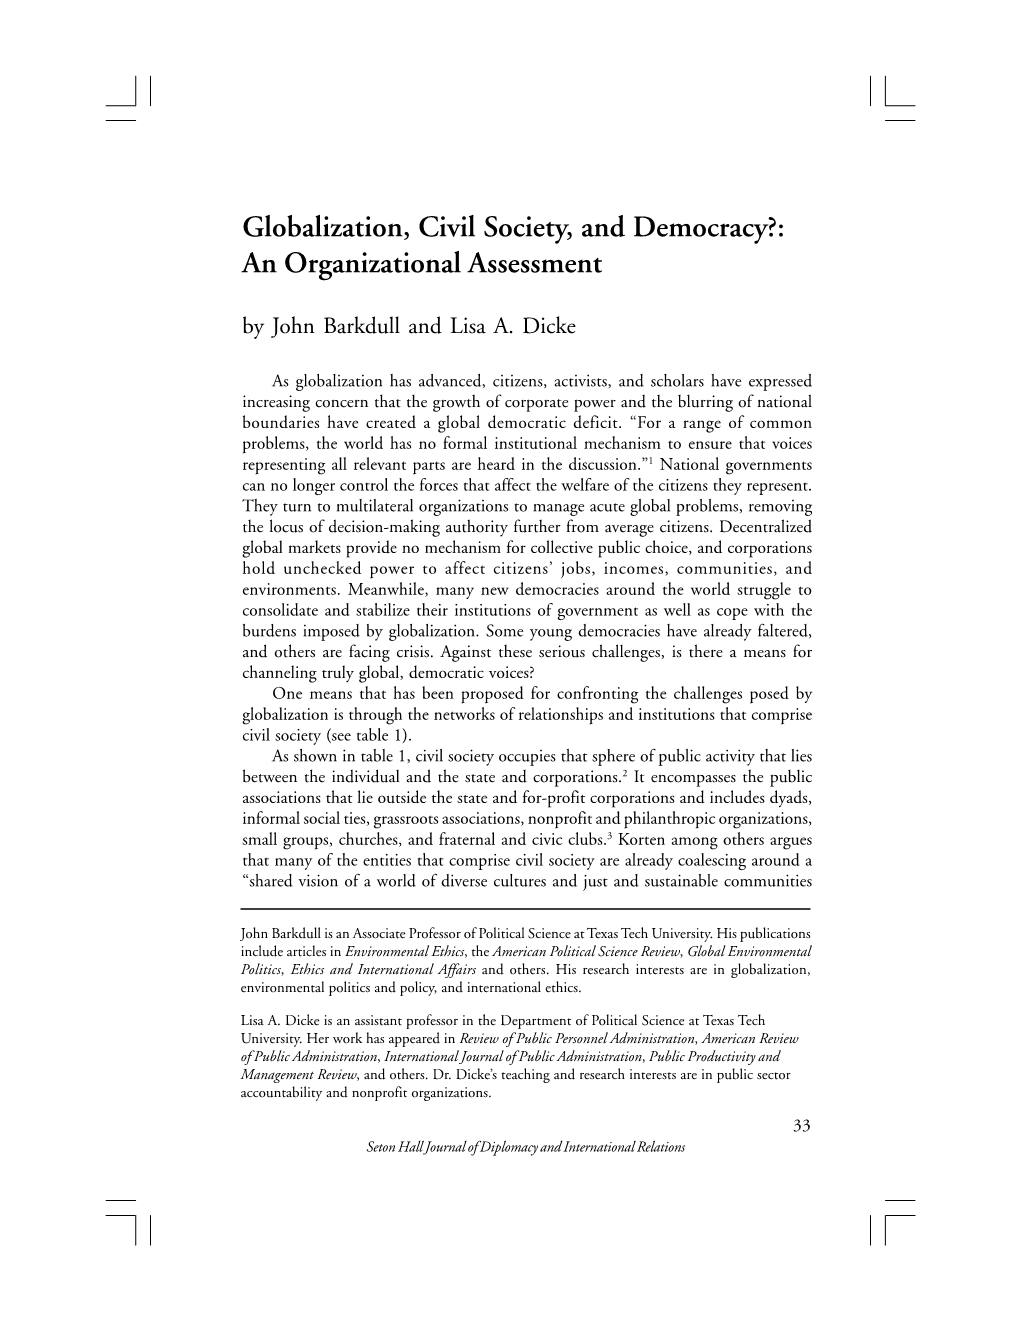 Globalization, Civil Society, and Democracy?: an Organizational Assessment by John Barkdull and Lisa A